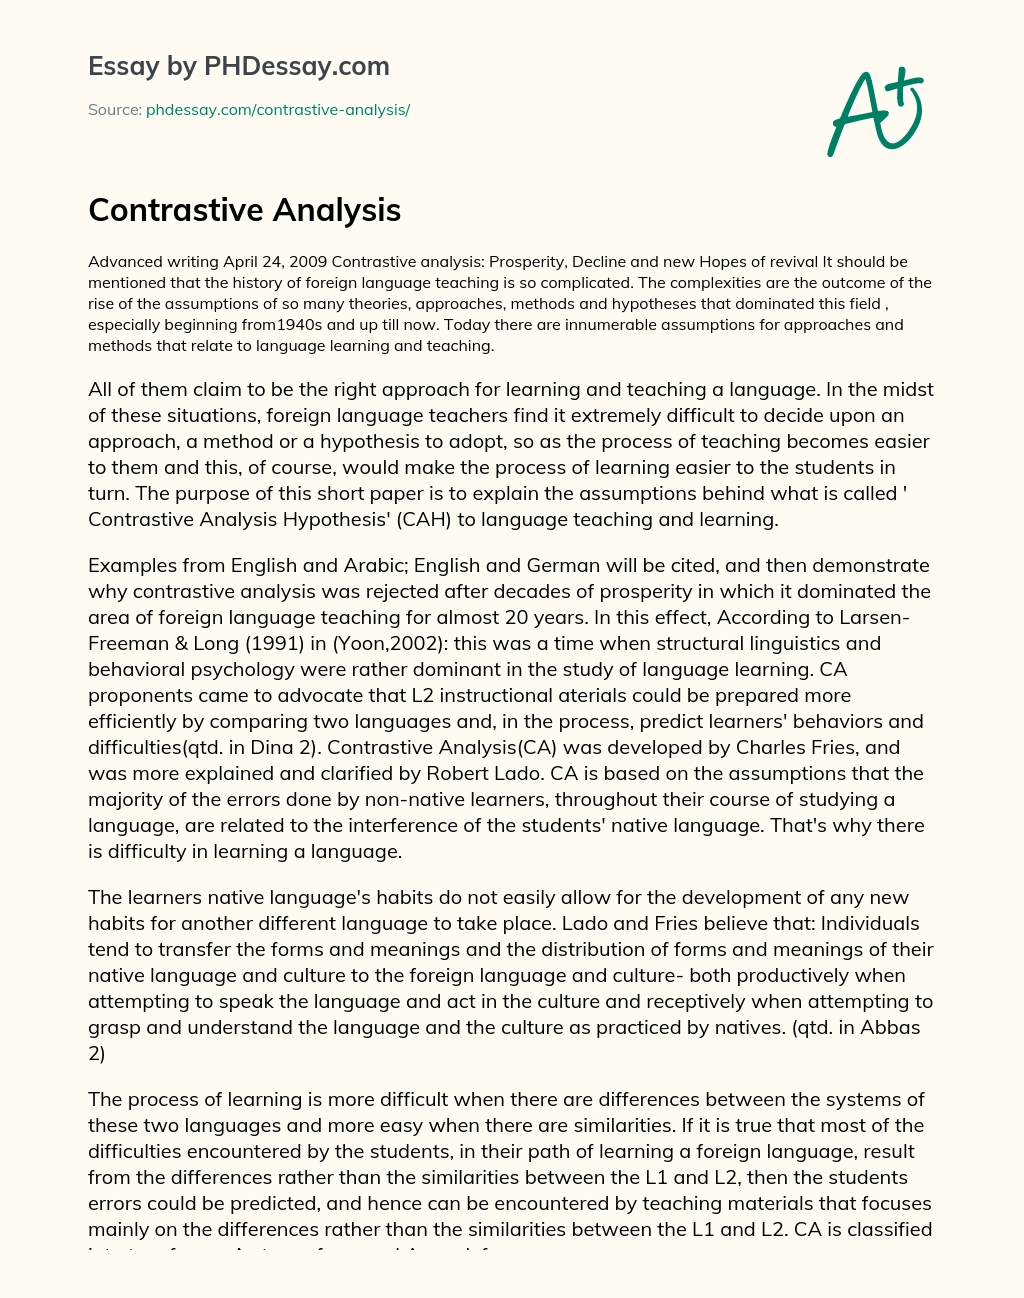 Contrastive Analysis essay